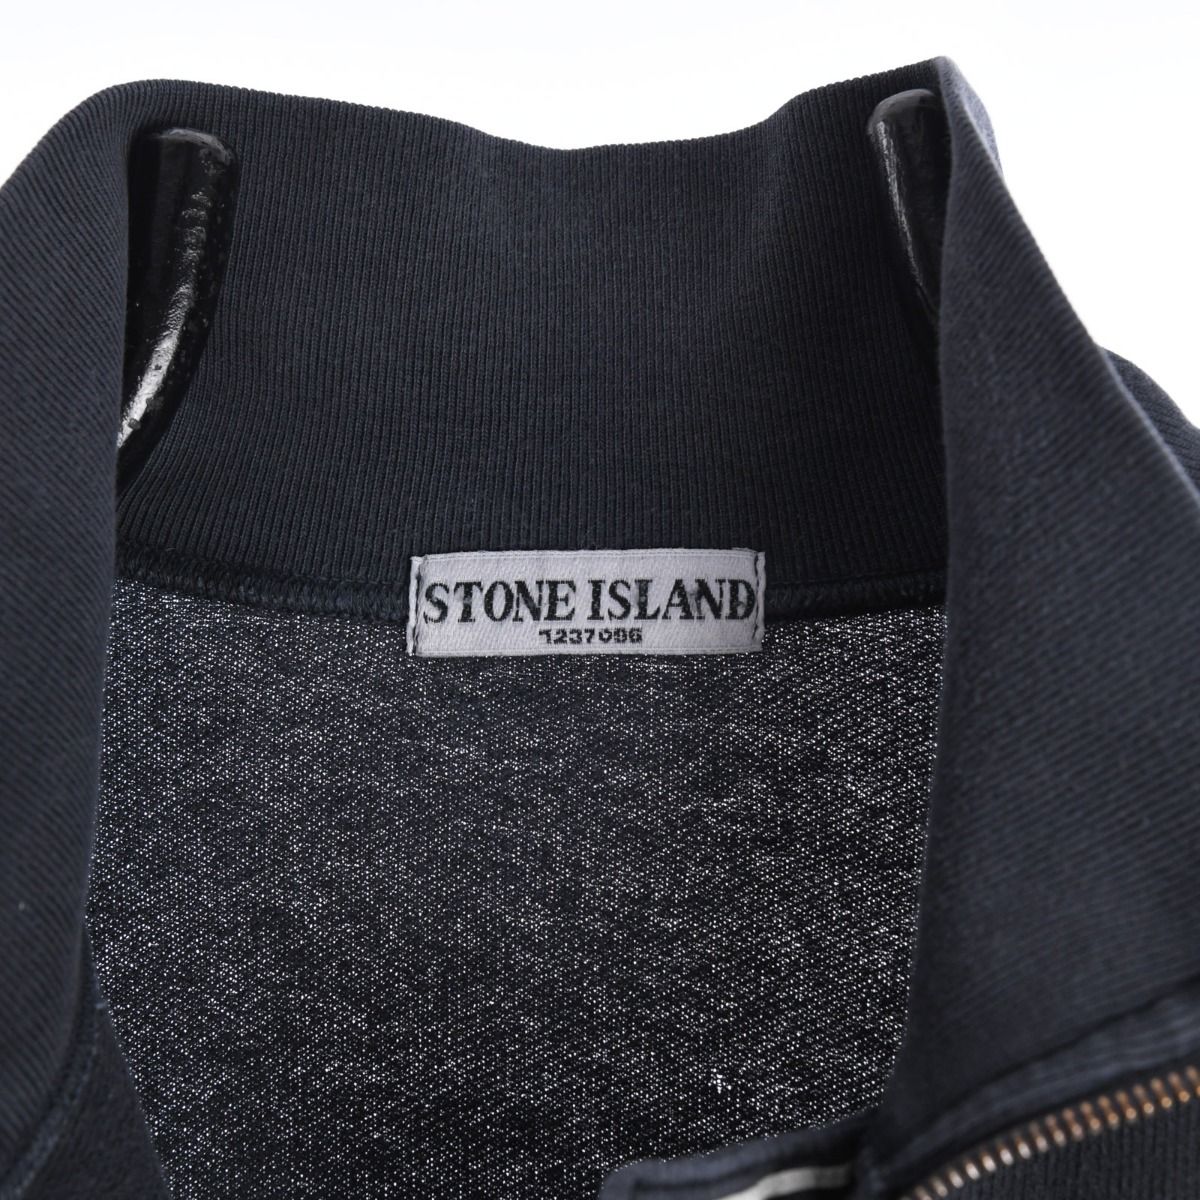 Stone Island S/S 2008 Half-Zip Sweatshirt